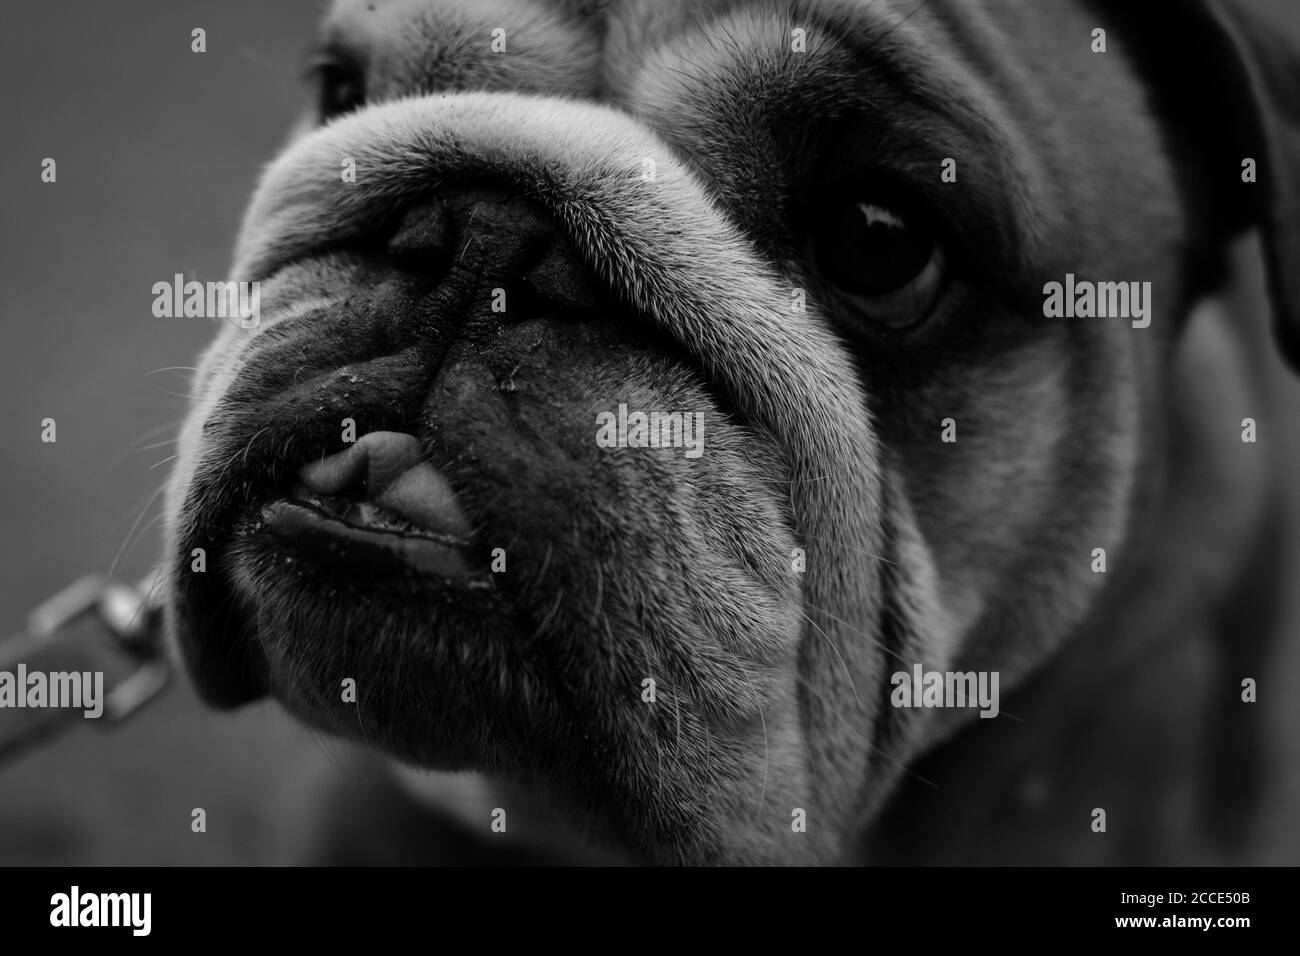 English bulldog Black and White Stock Photos & Images - Alamy